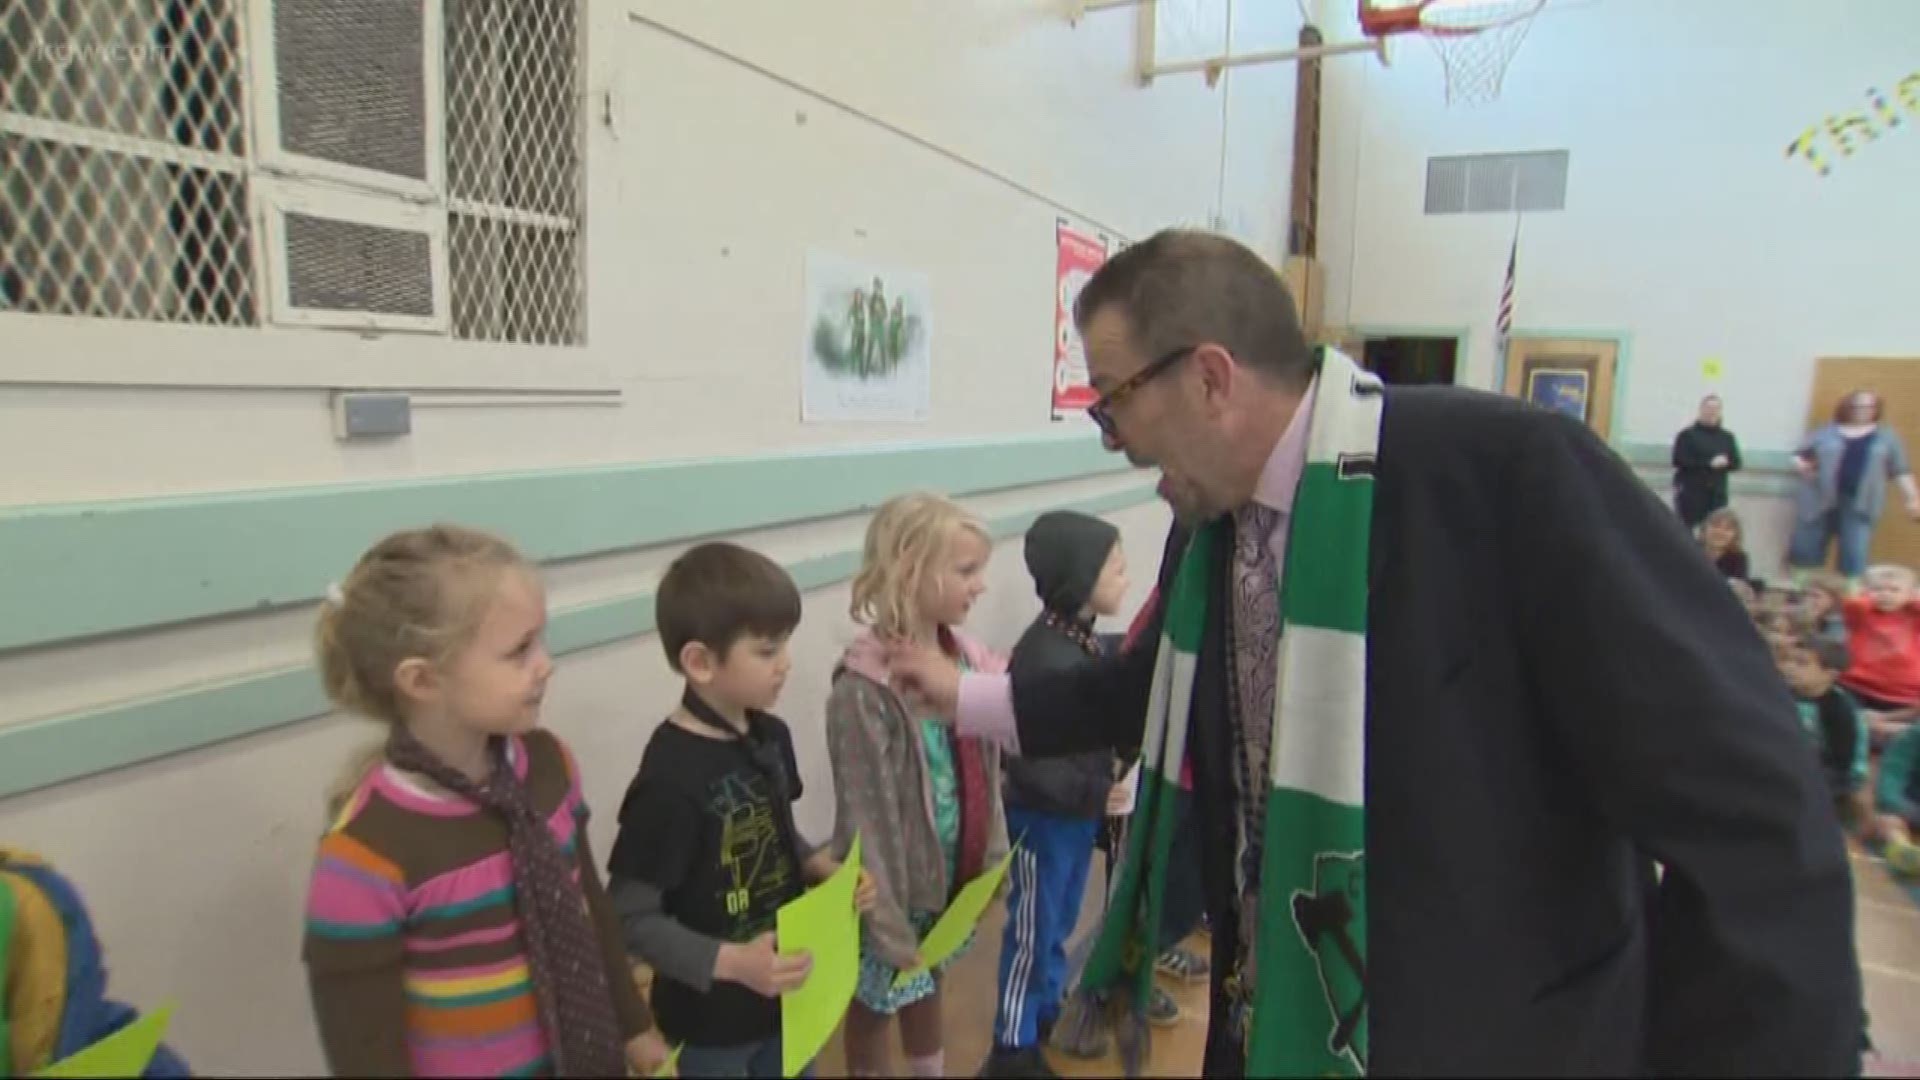 The principal of Llewelyn Elementary School is rewarding students with neckties.